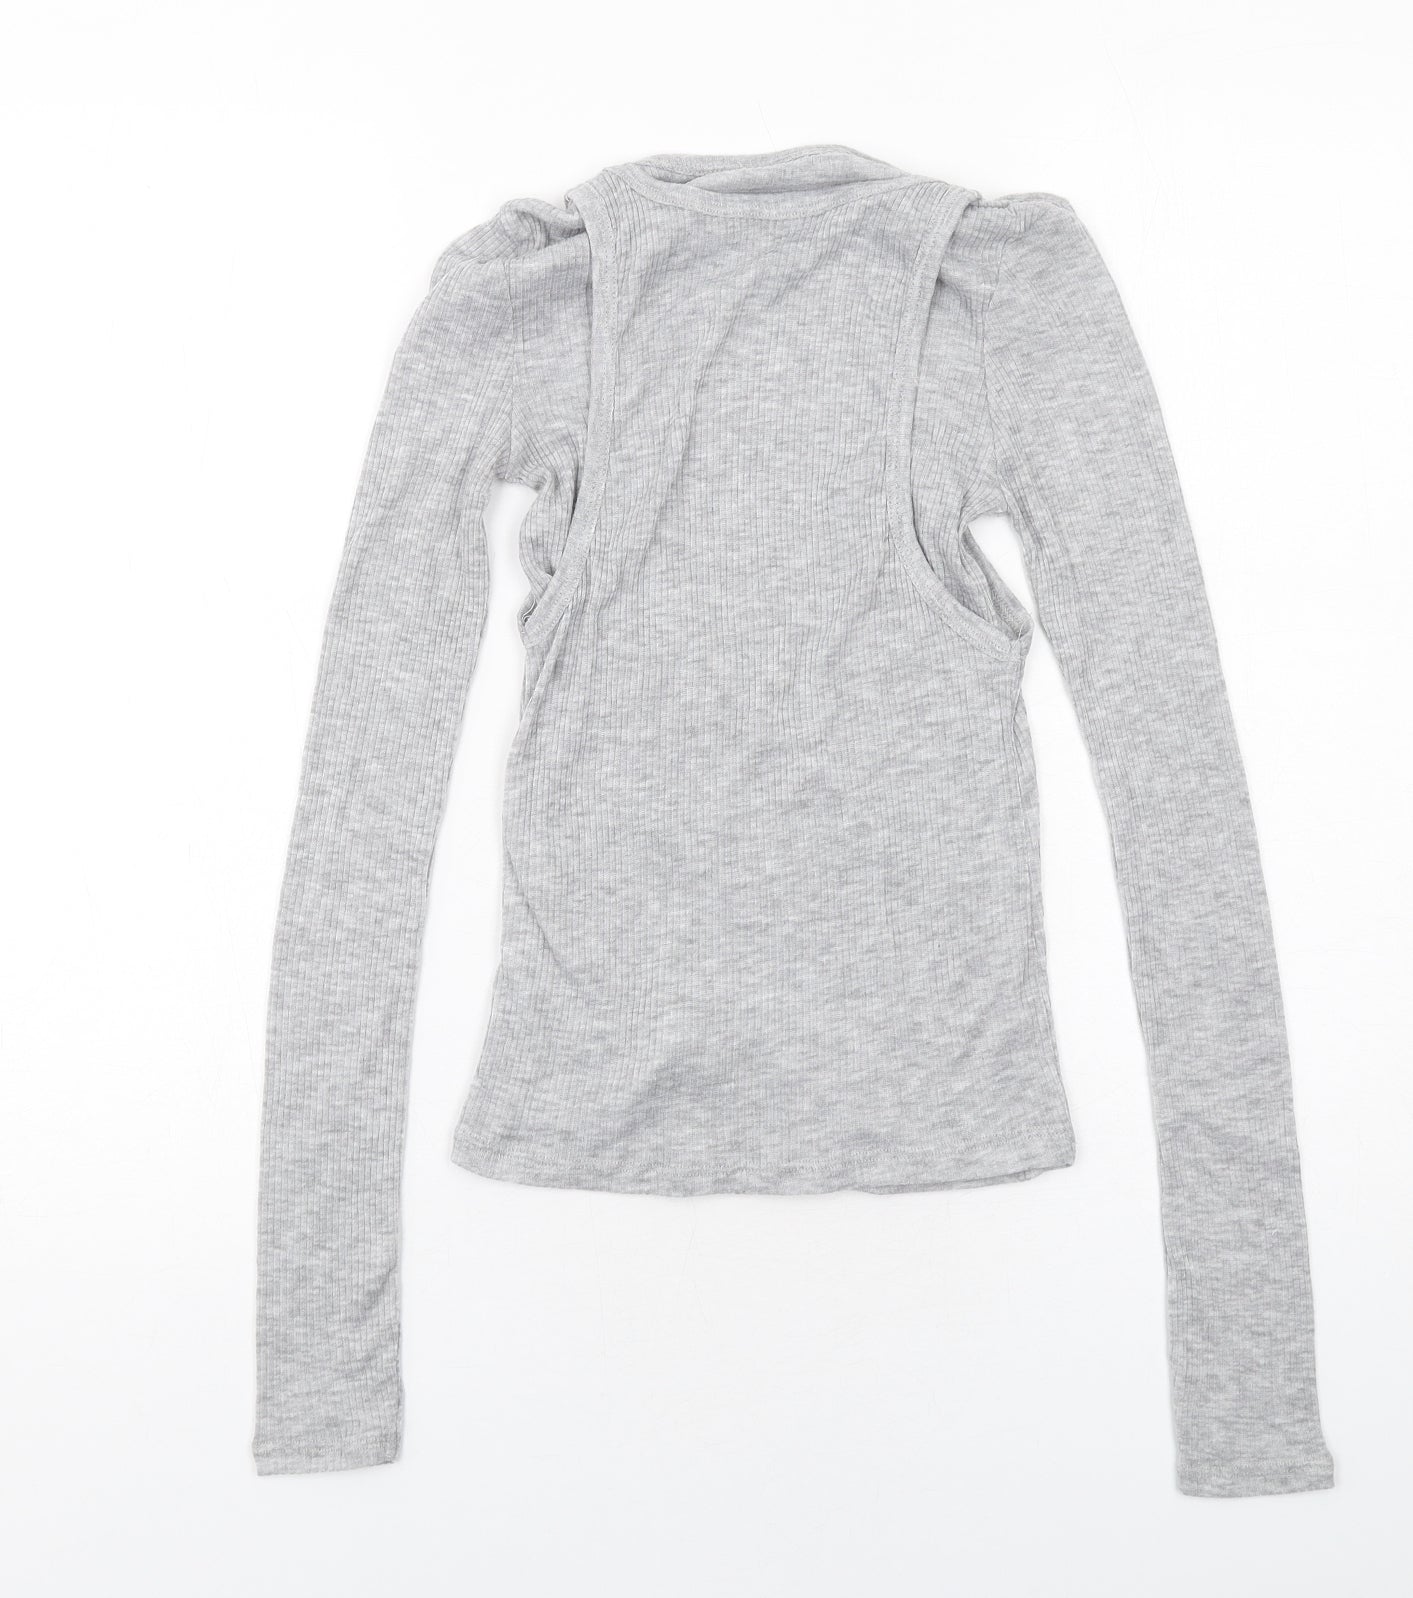 Zara Womens Grey Cotton Basic T-Shirt Size S Round Neck